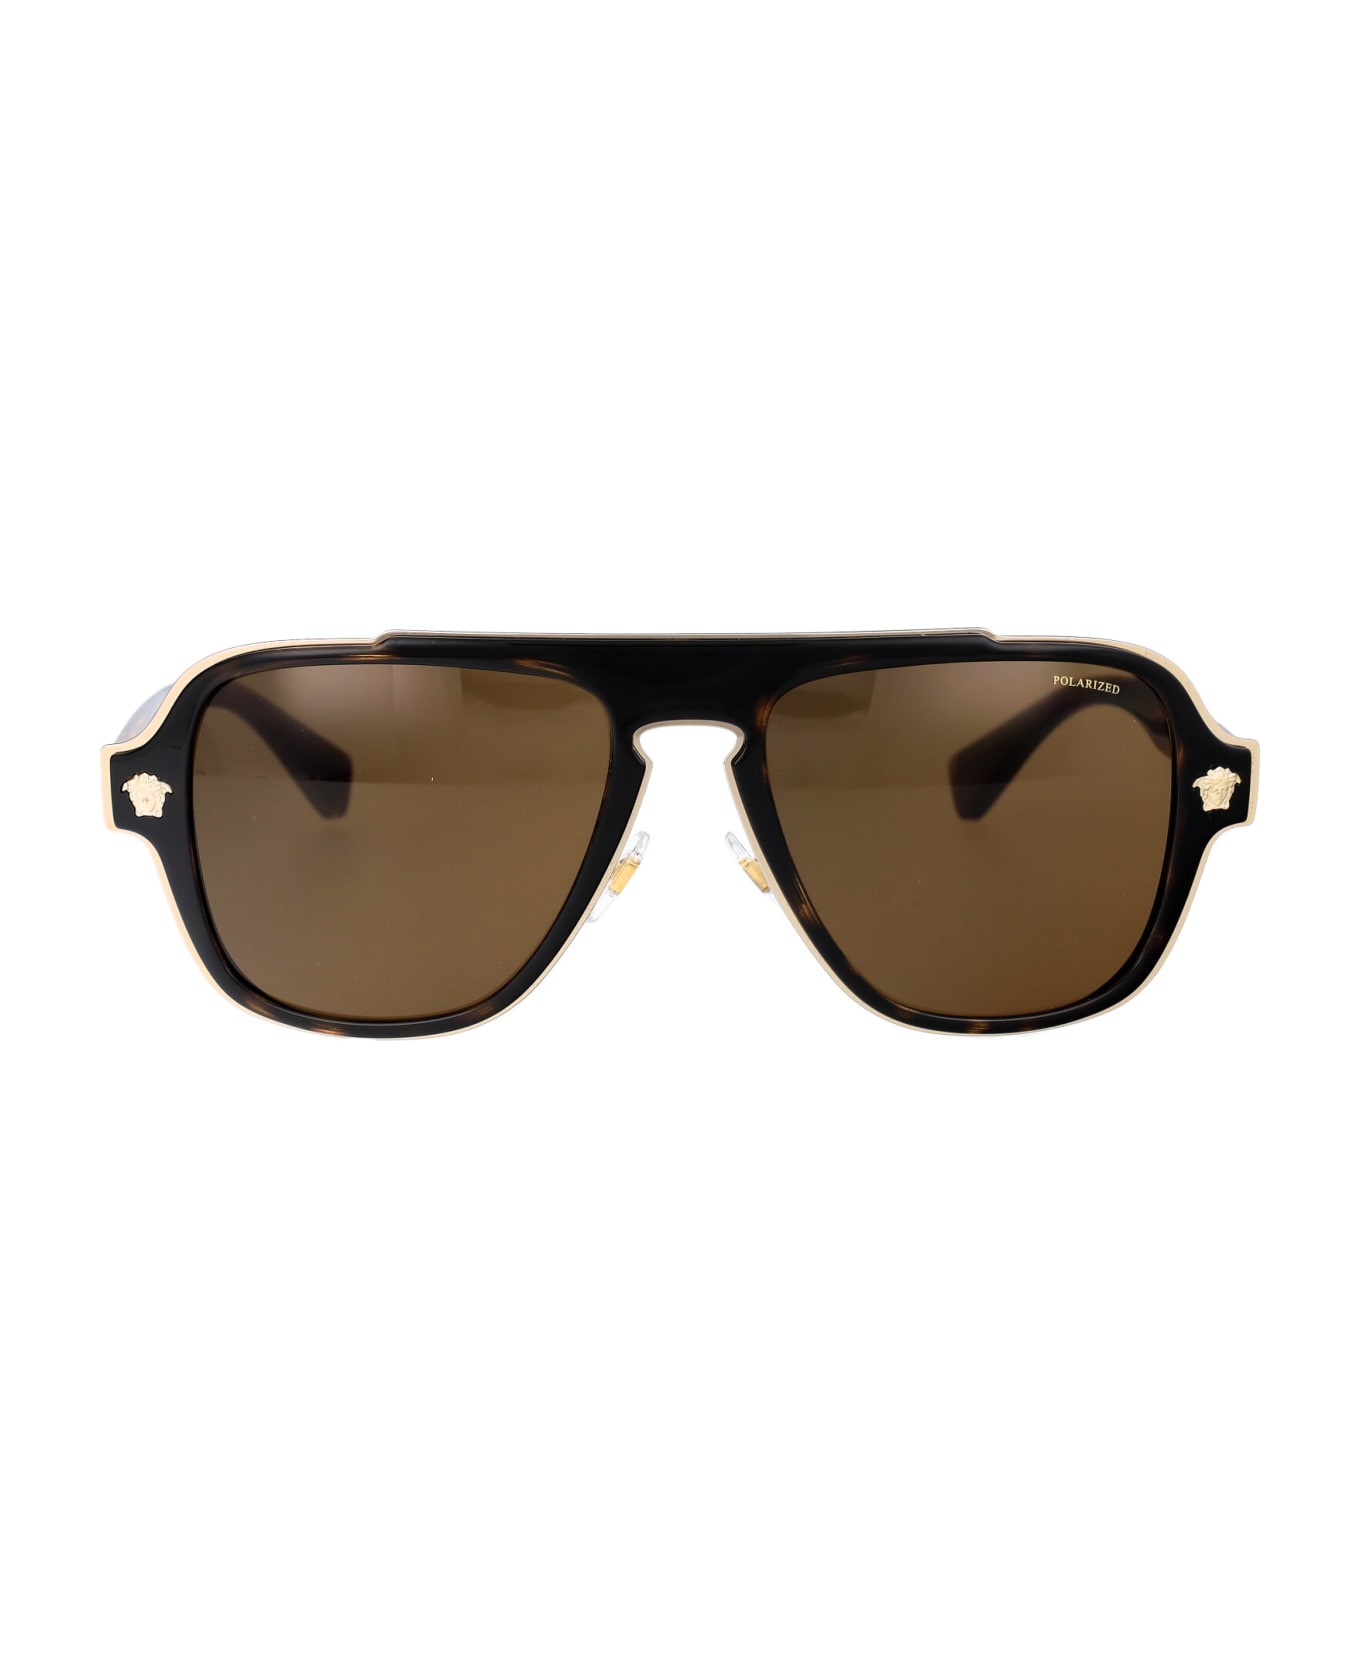 Versace Eyewear 0ve2199 Sunglasses - 1252LA Havana